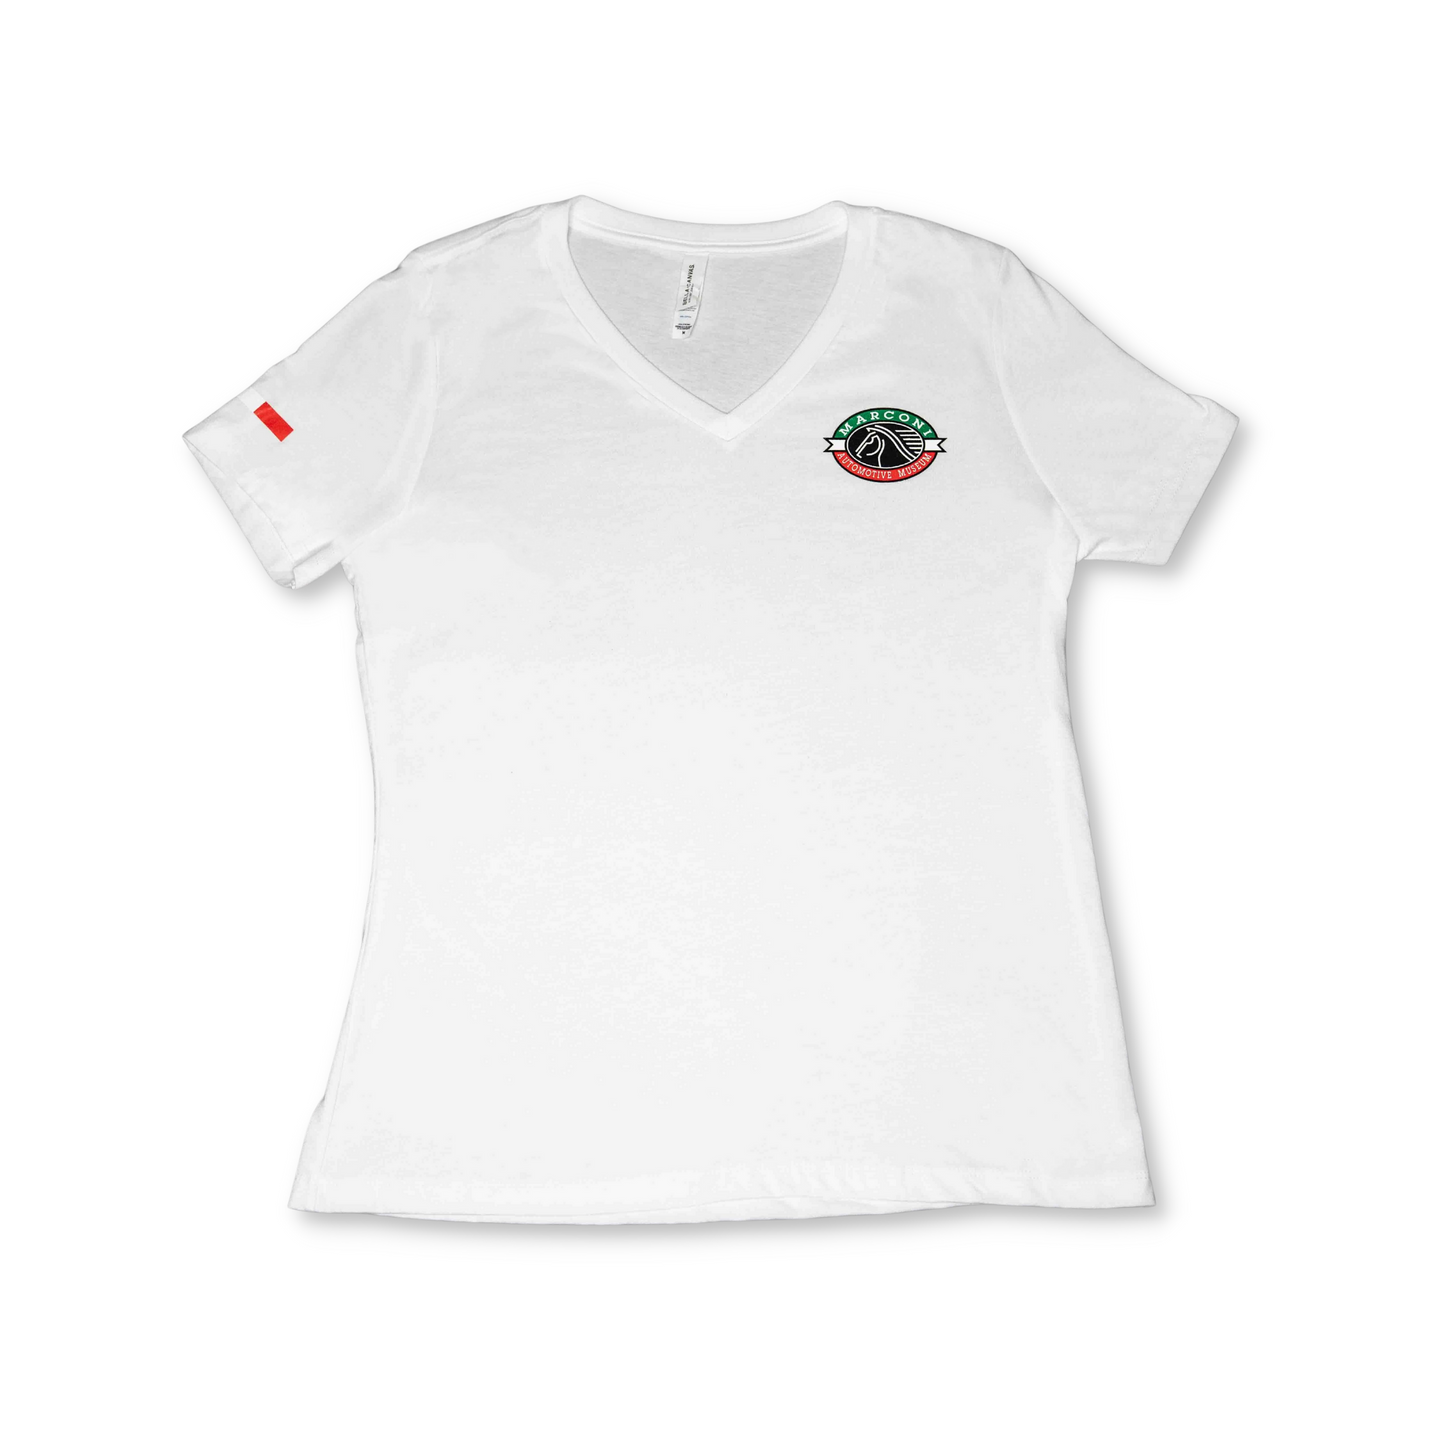 NEW - Women's V-Neck T-Shirt - White